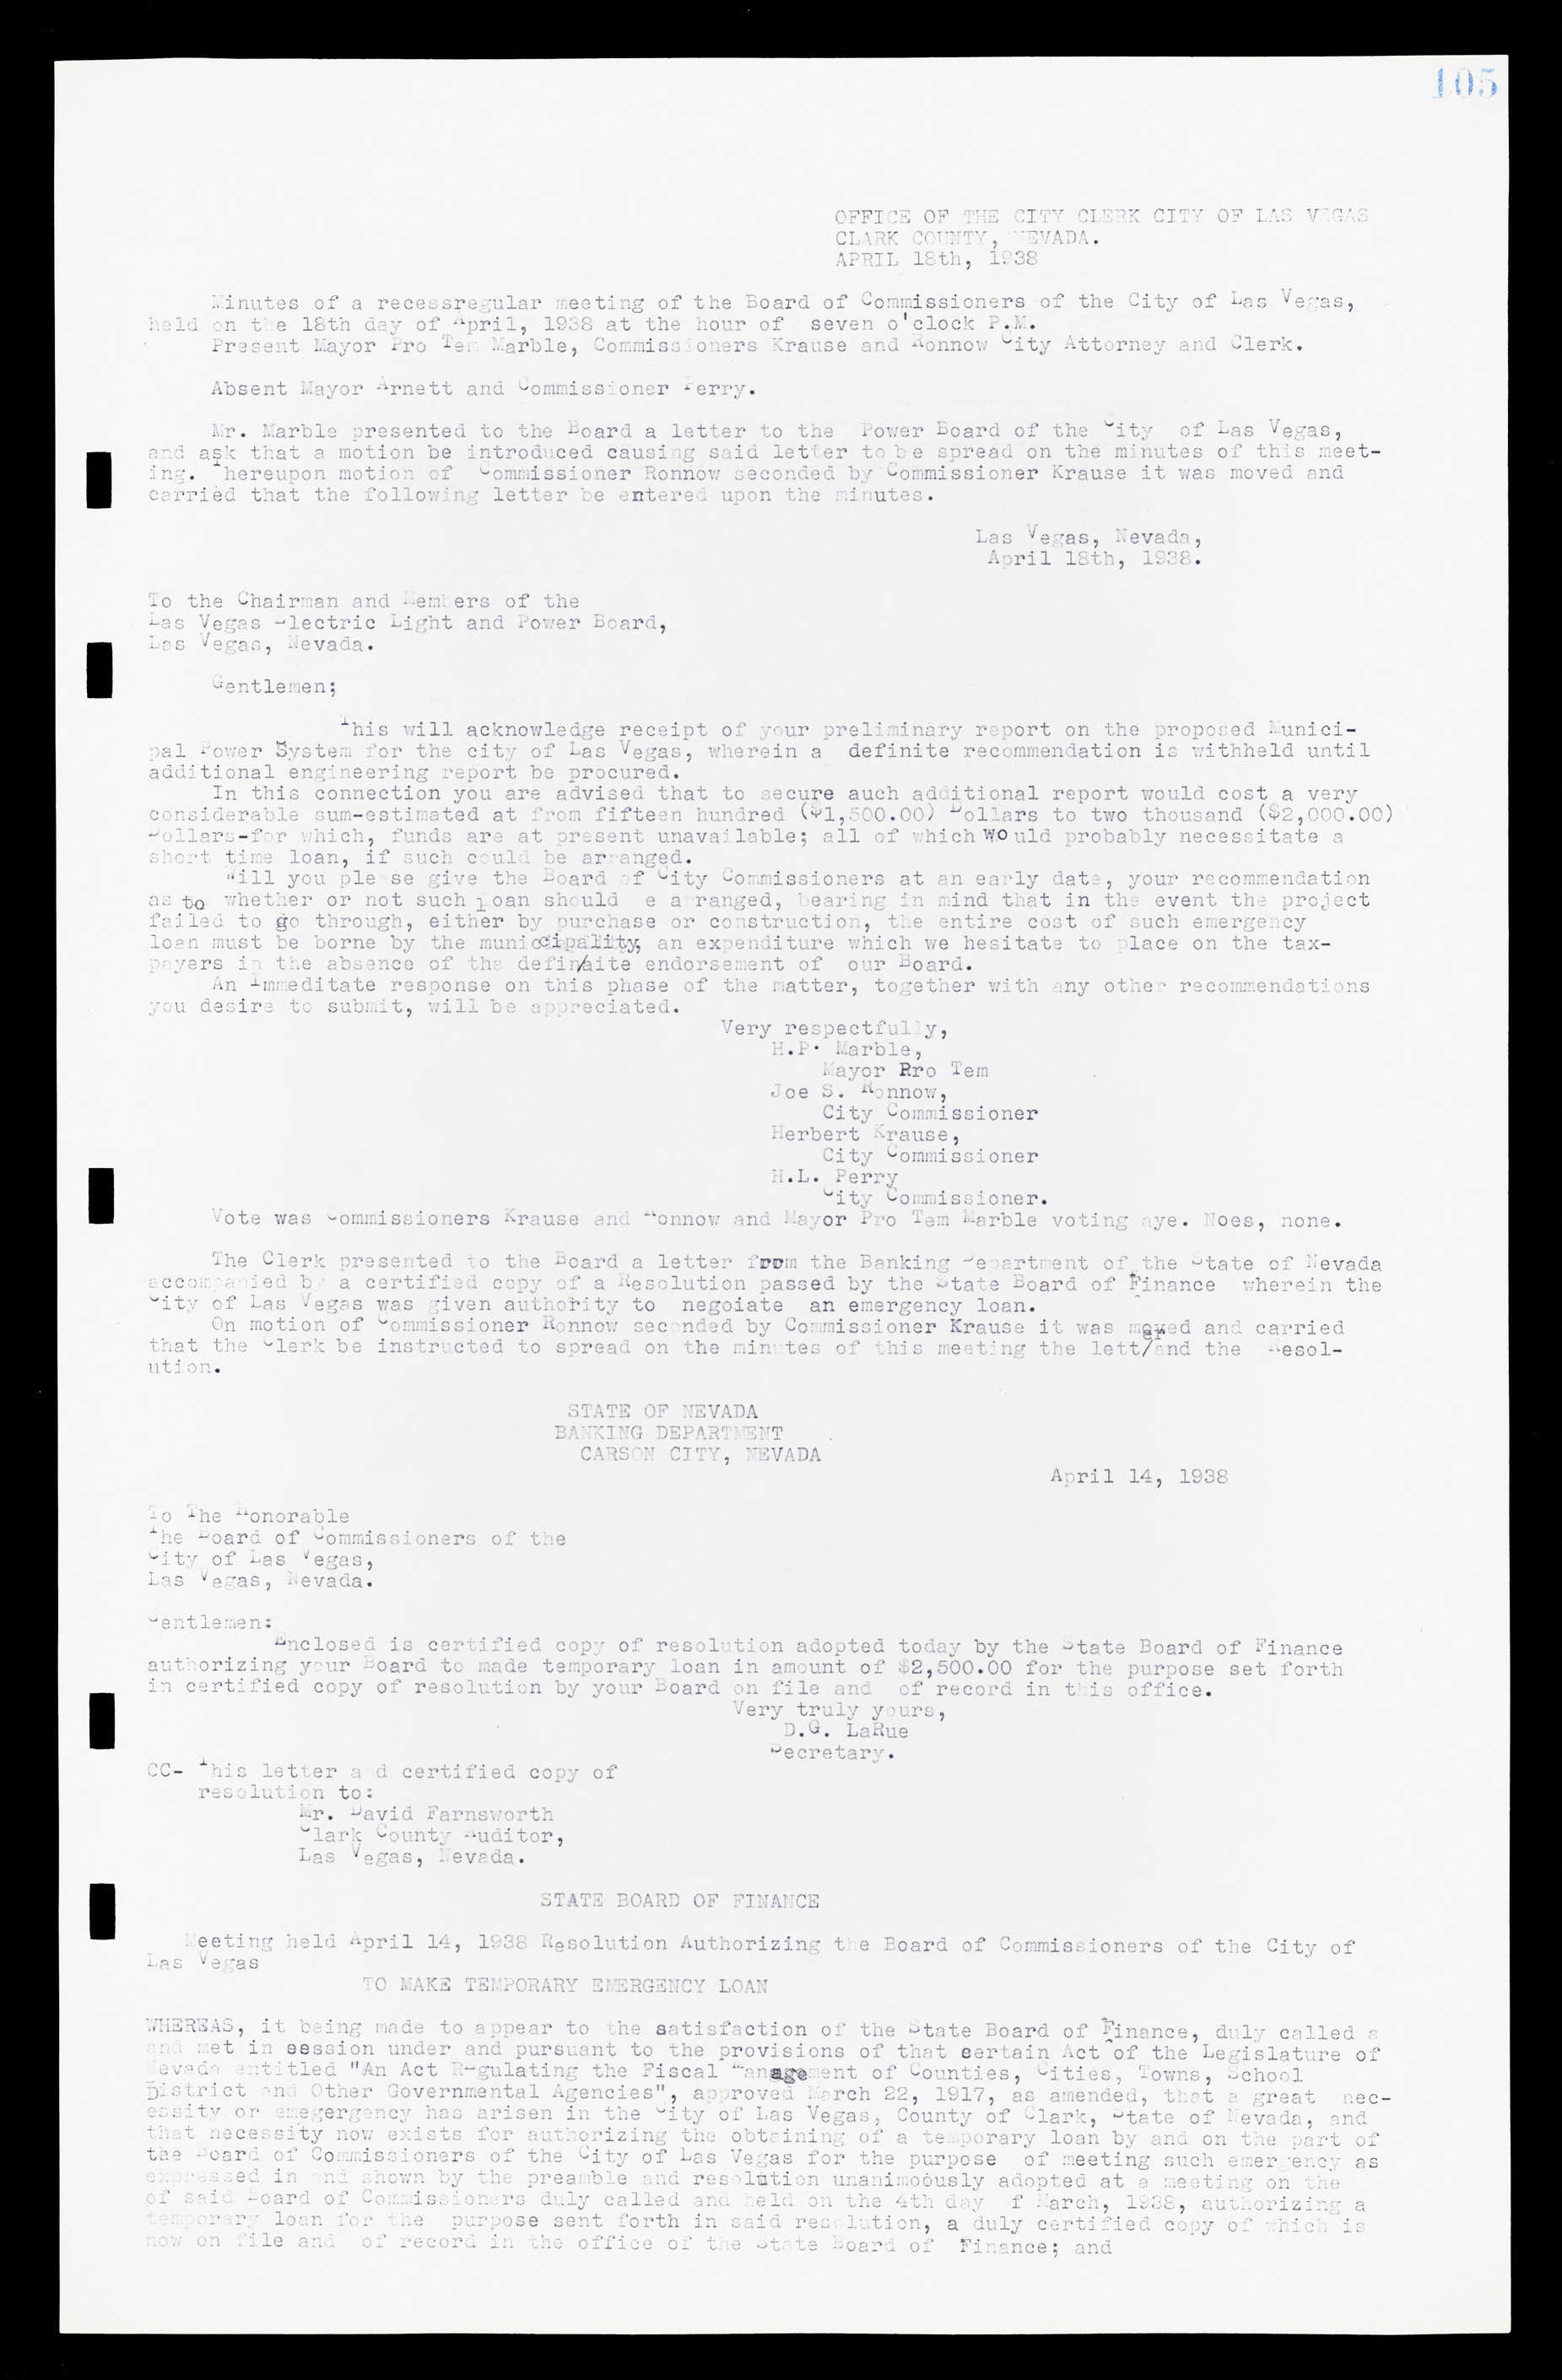 Las Vegas City Commission Minutes, February 17, 1937 to August 4, 1942, lvc000004-116